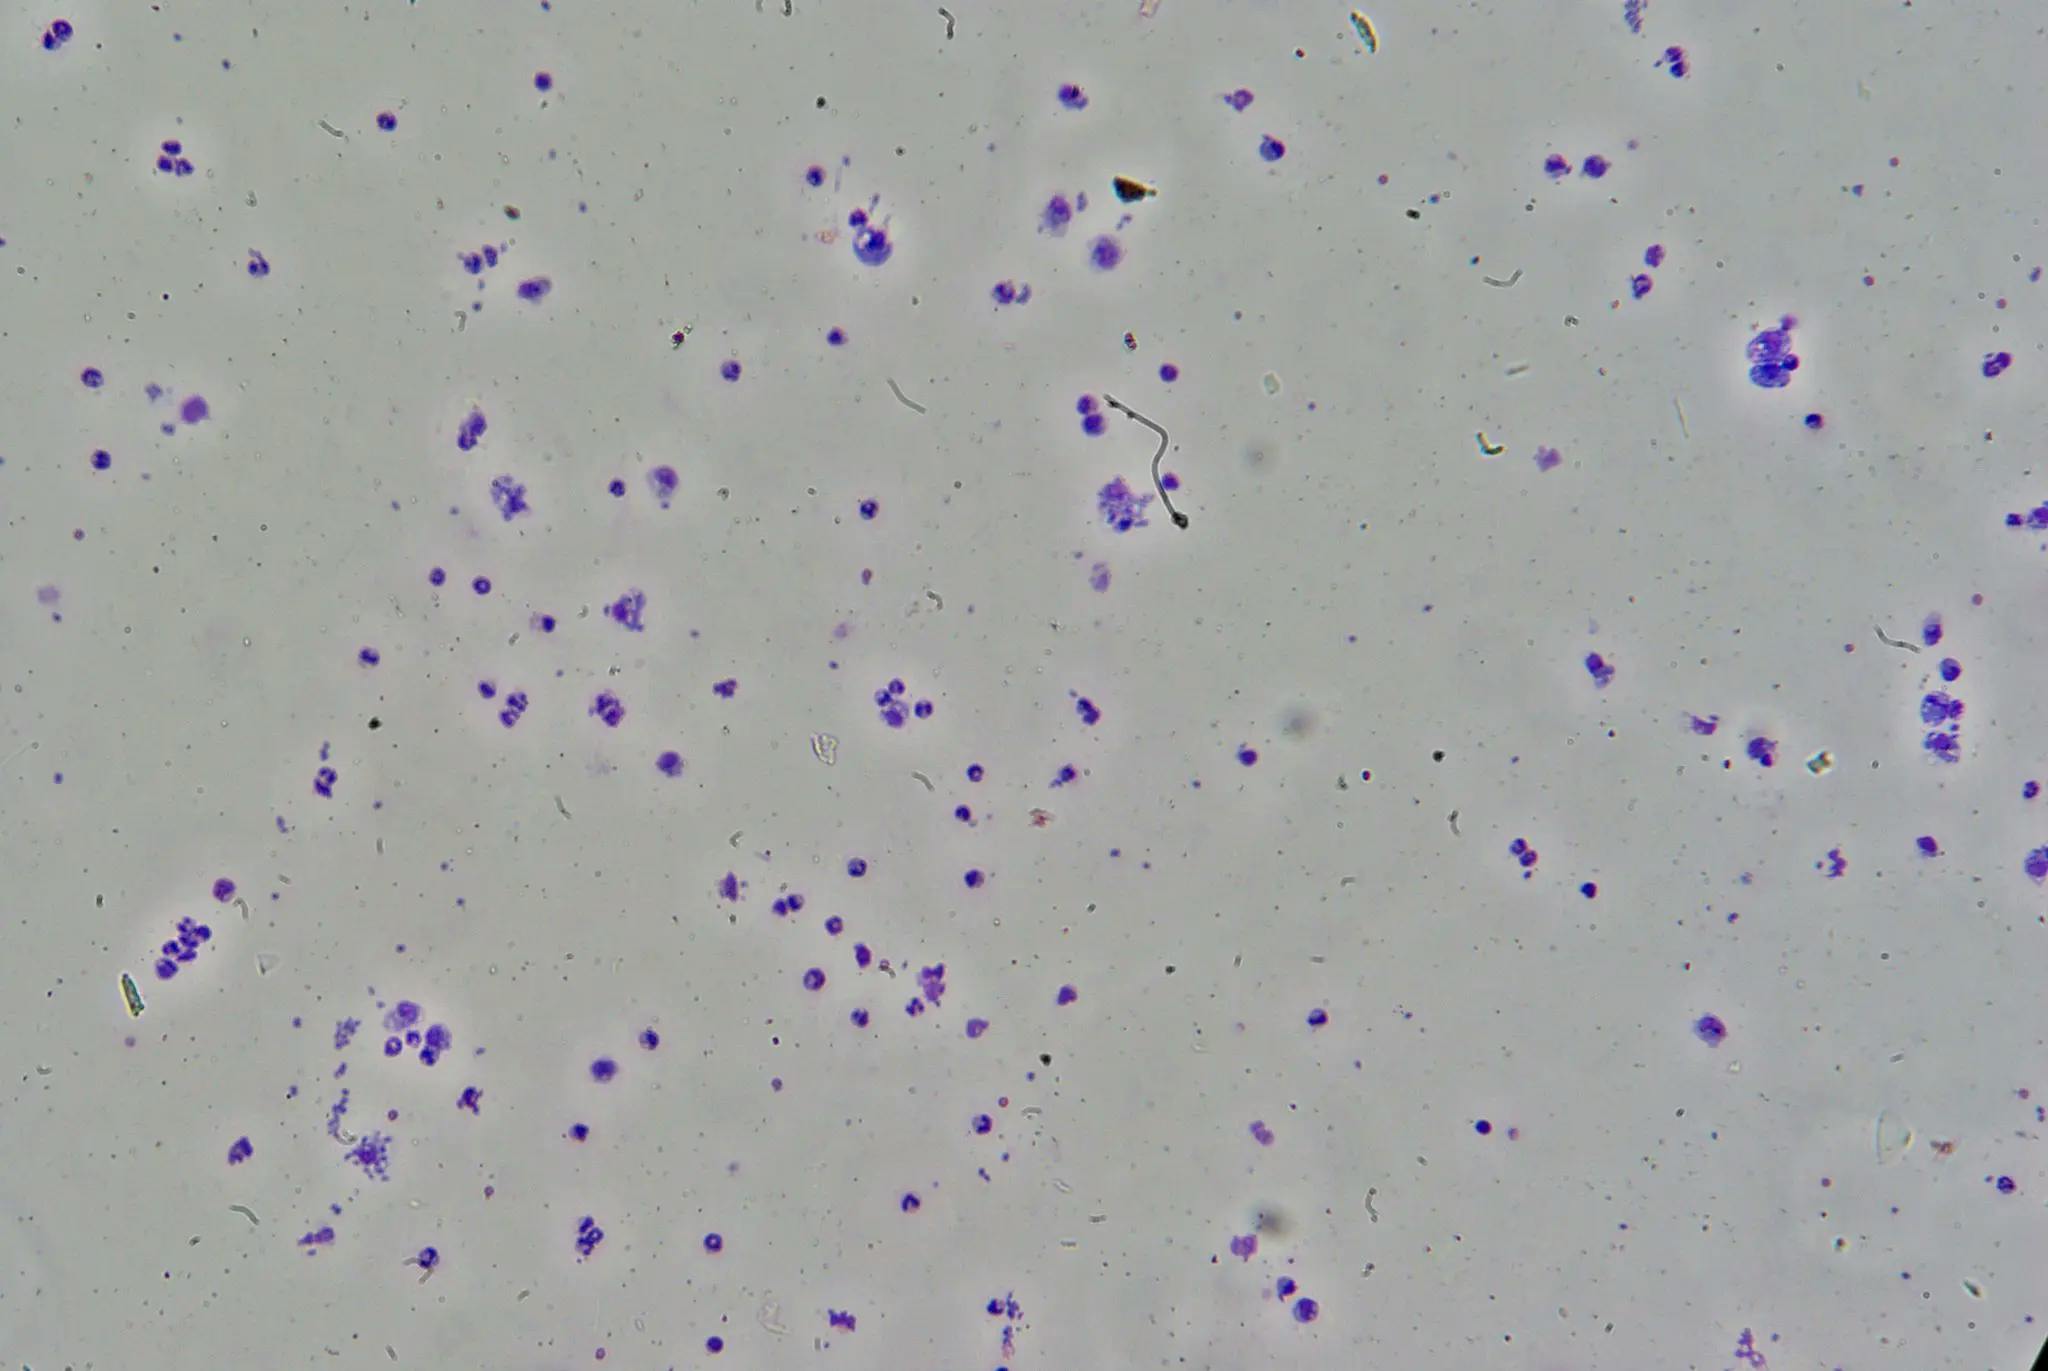 4. Toxoplasma Gondii